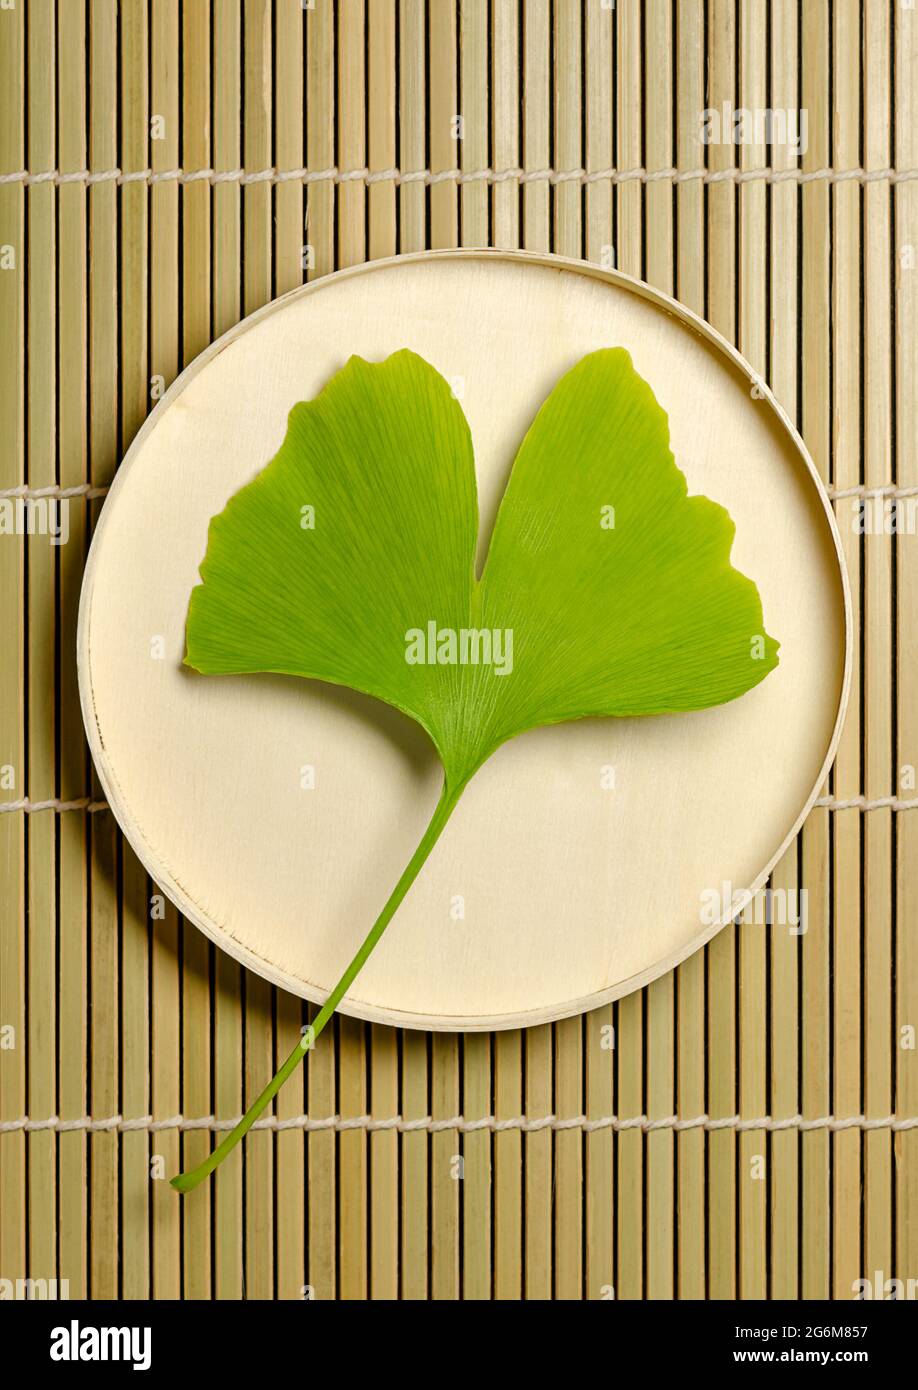 Ginkgo leaf on a balsa wood cap over a bamboo mat. Ginkgo biloba, gingko or maidenhair tree, official symbol of Tokyo. Stock Photo